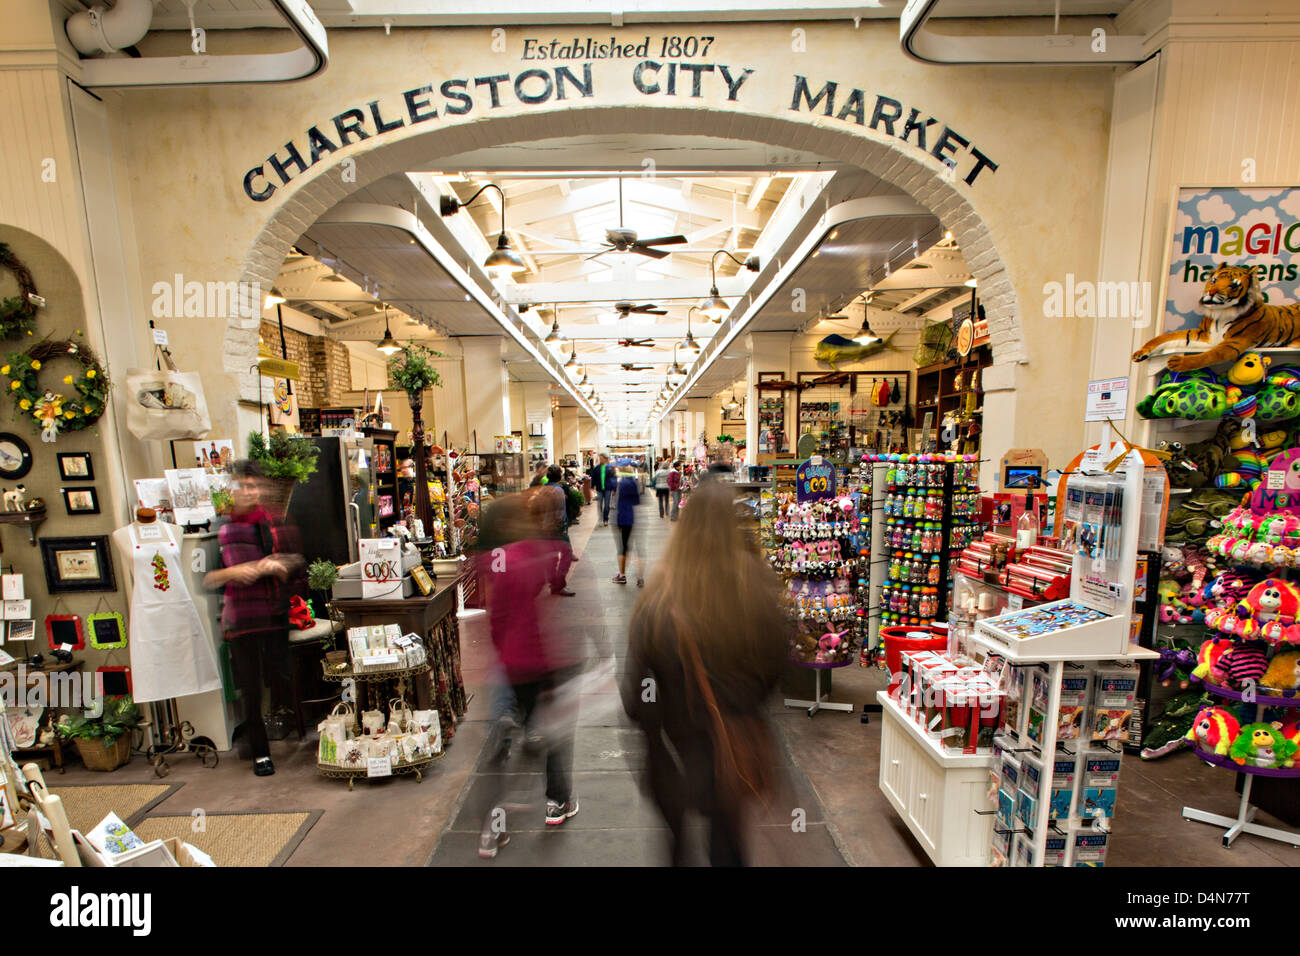 Historic Charleston City Market on Market Street in Charleston, SC